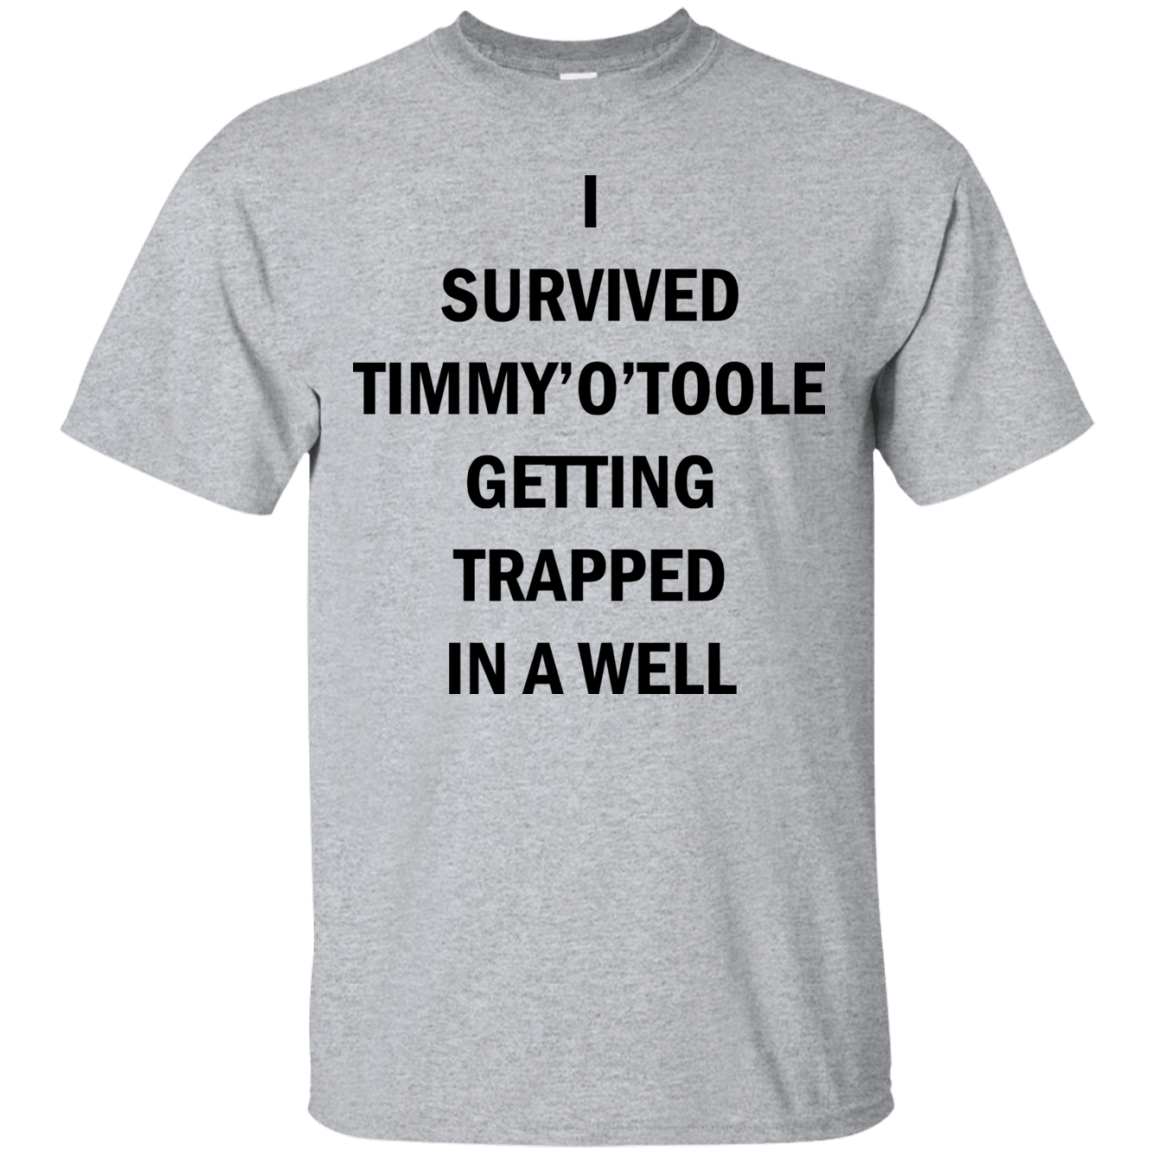 T-Shirts Sport Grey / Small Timmy Otoole T-Shirt